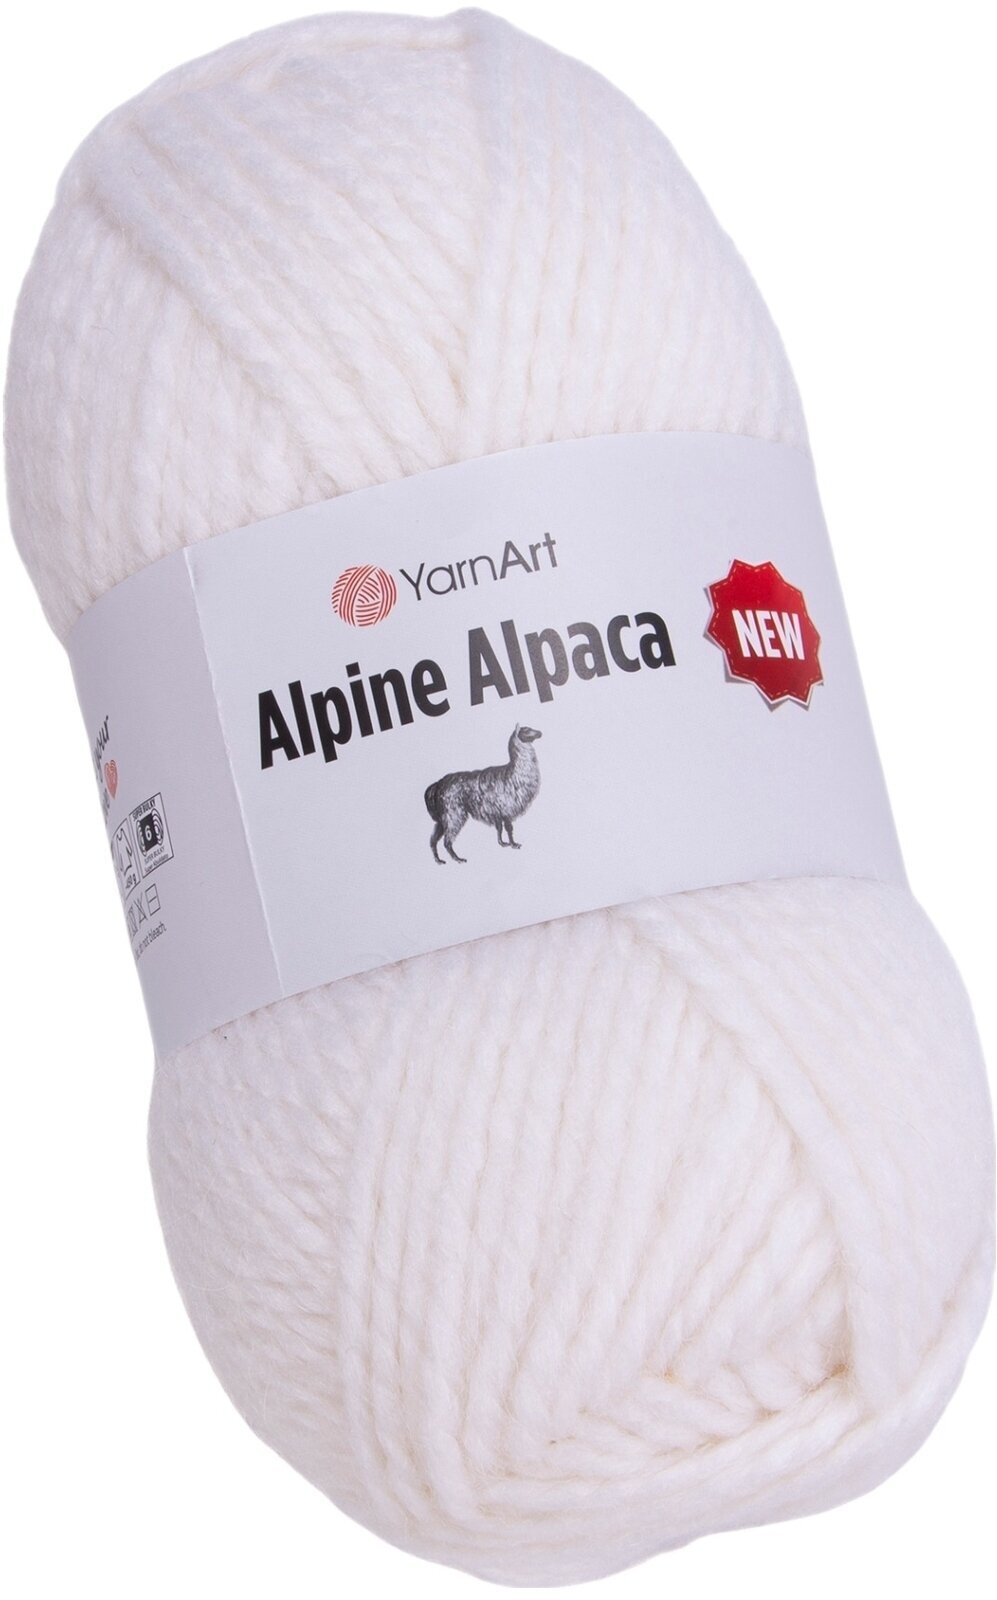 Knitting Yarn Yarn Art Alpine Alpaca 1440